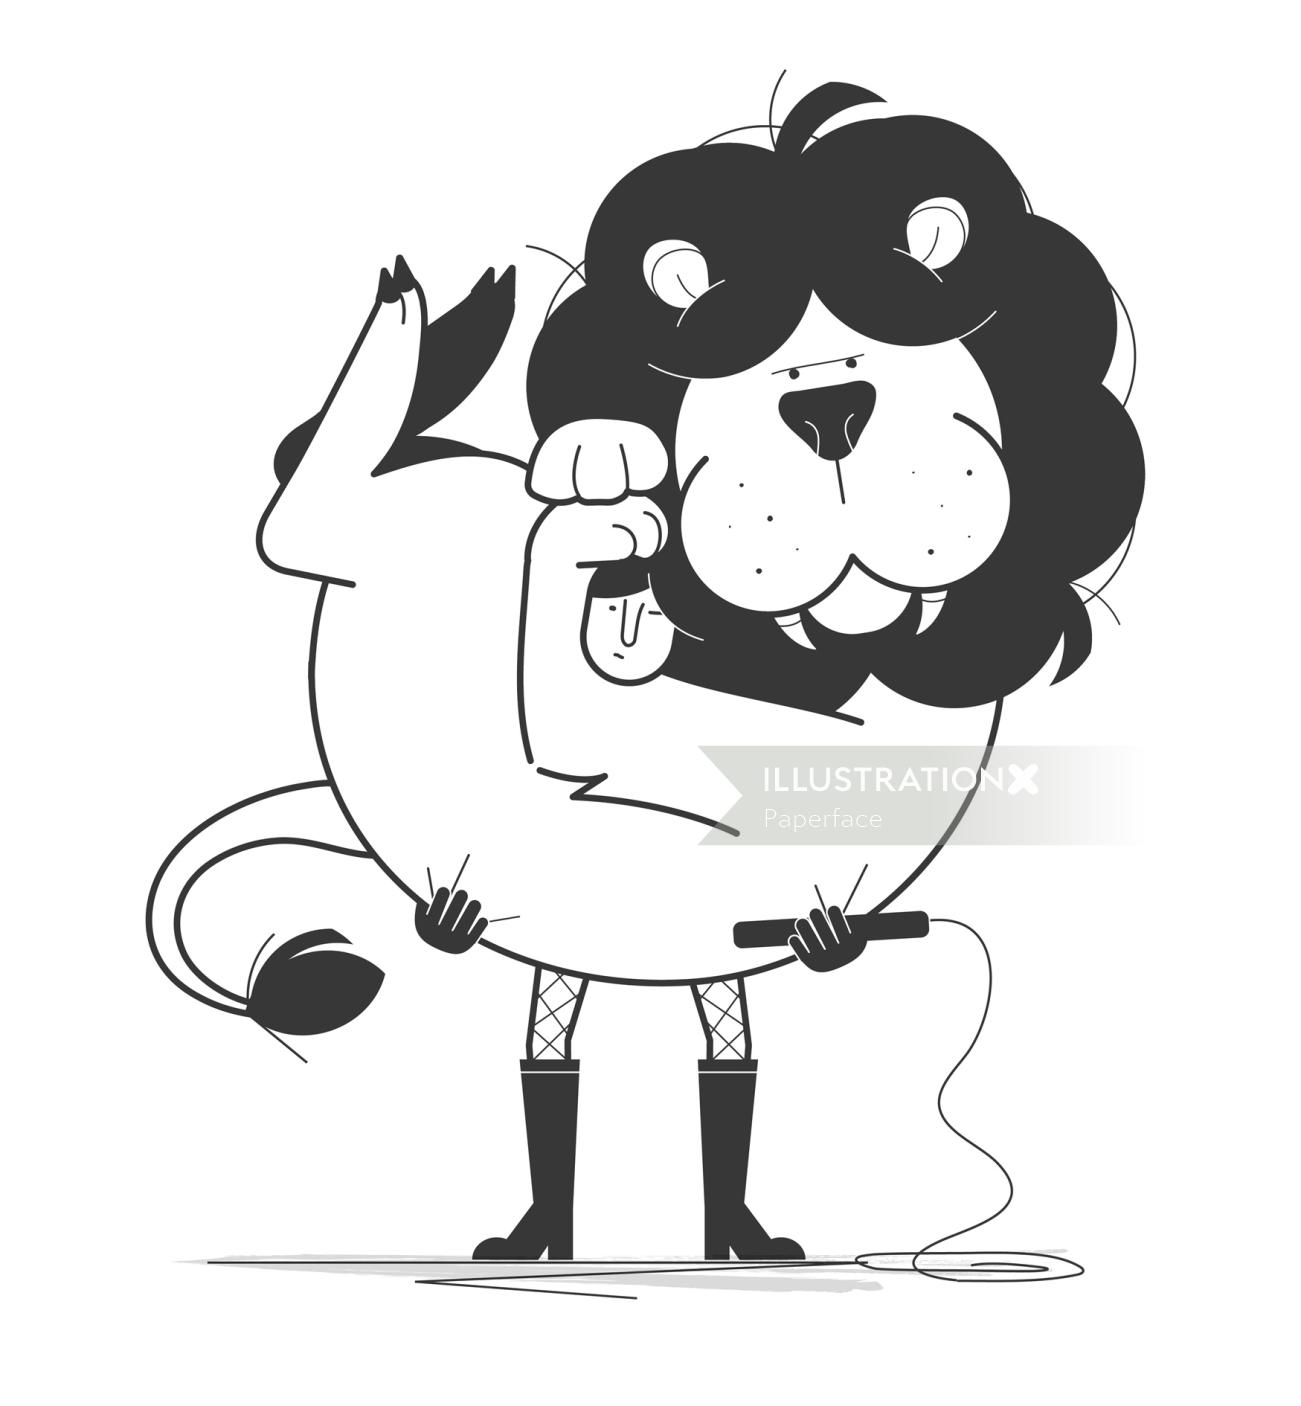 Comic illustration of lion 